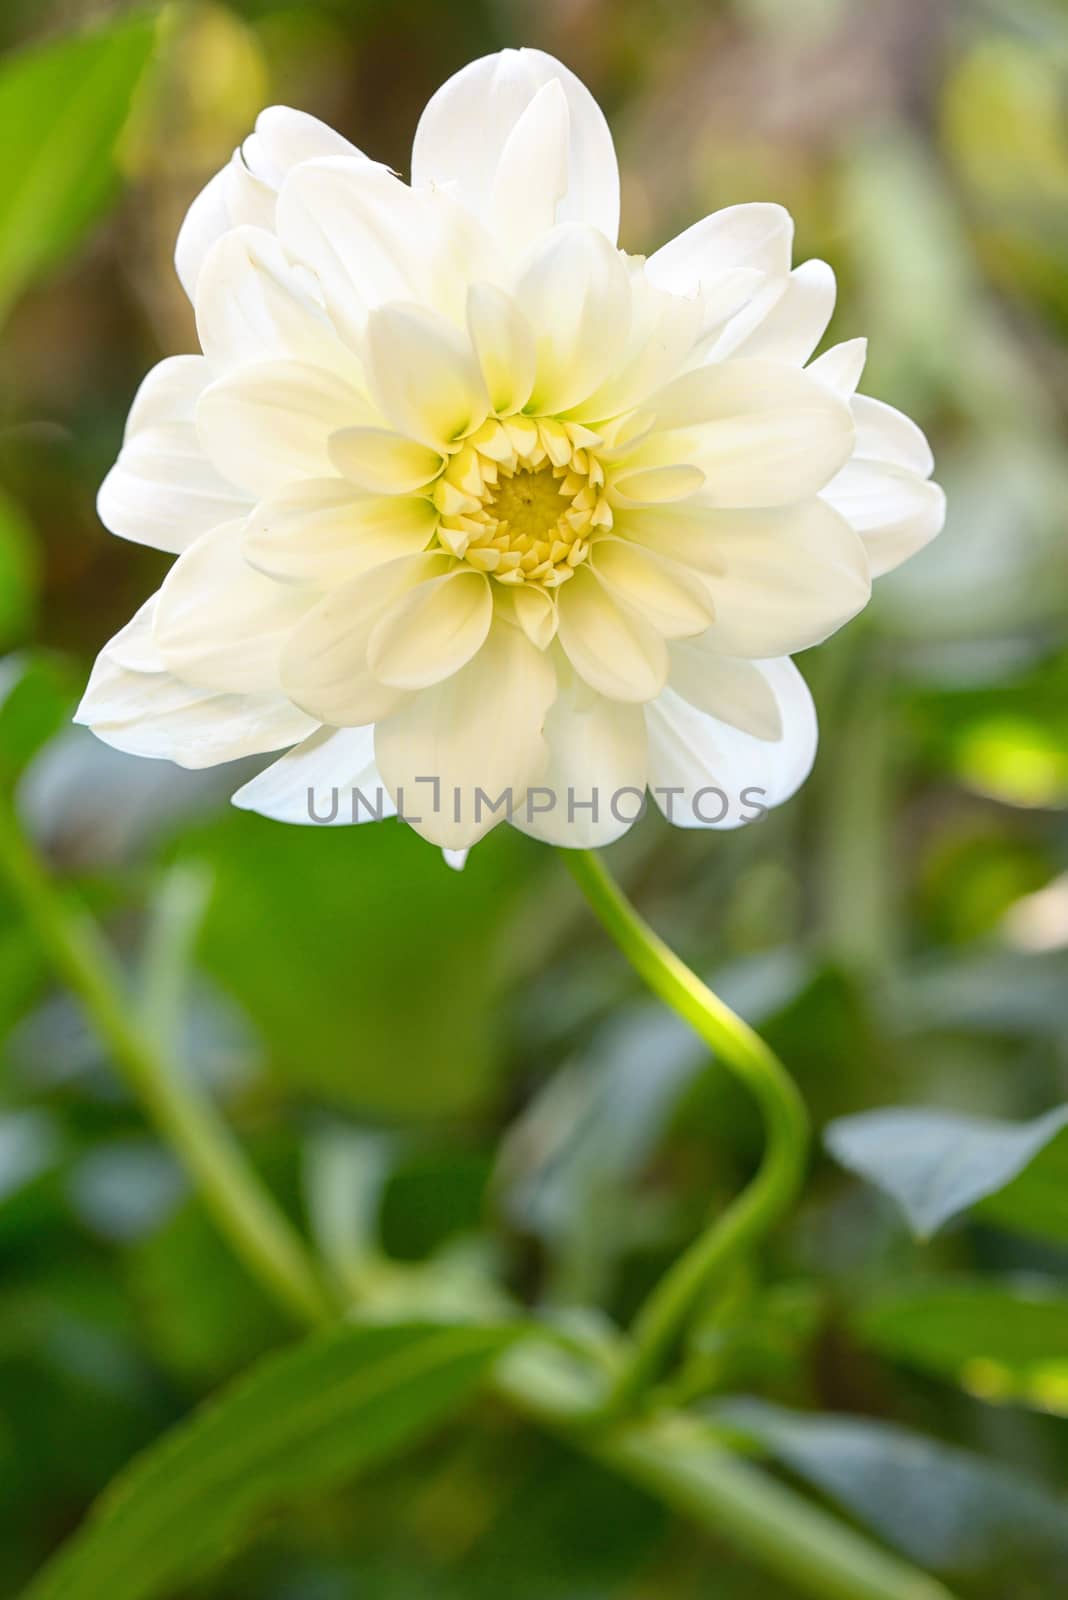 White Dahlia flower by mady70